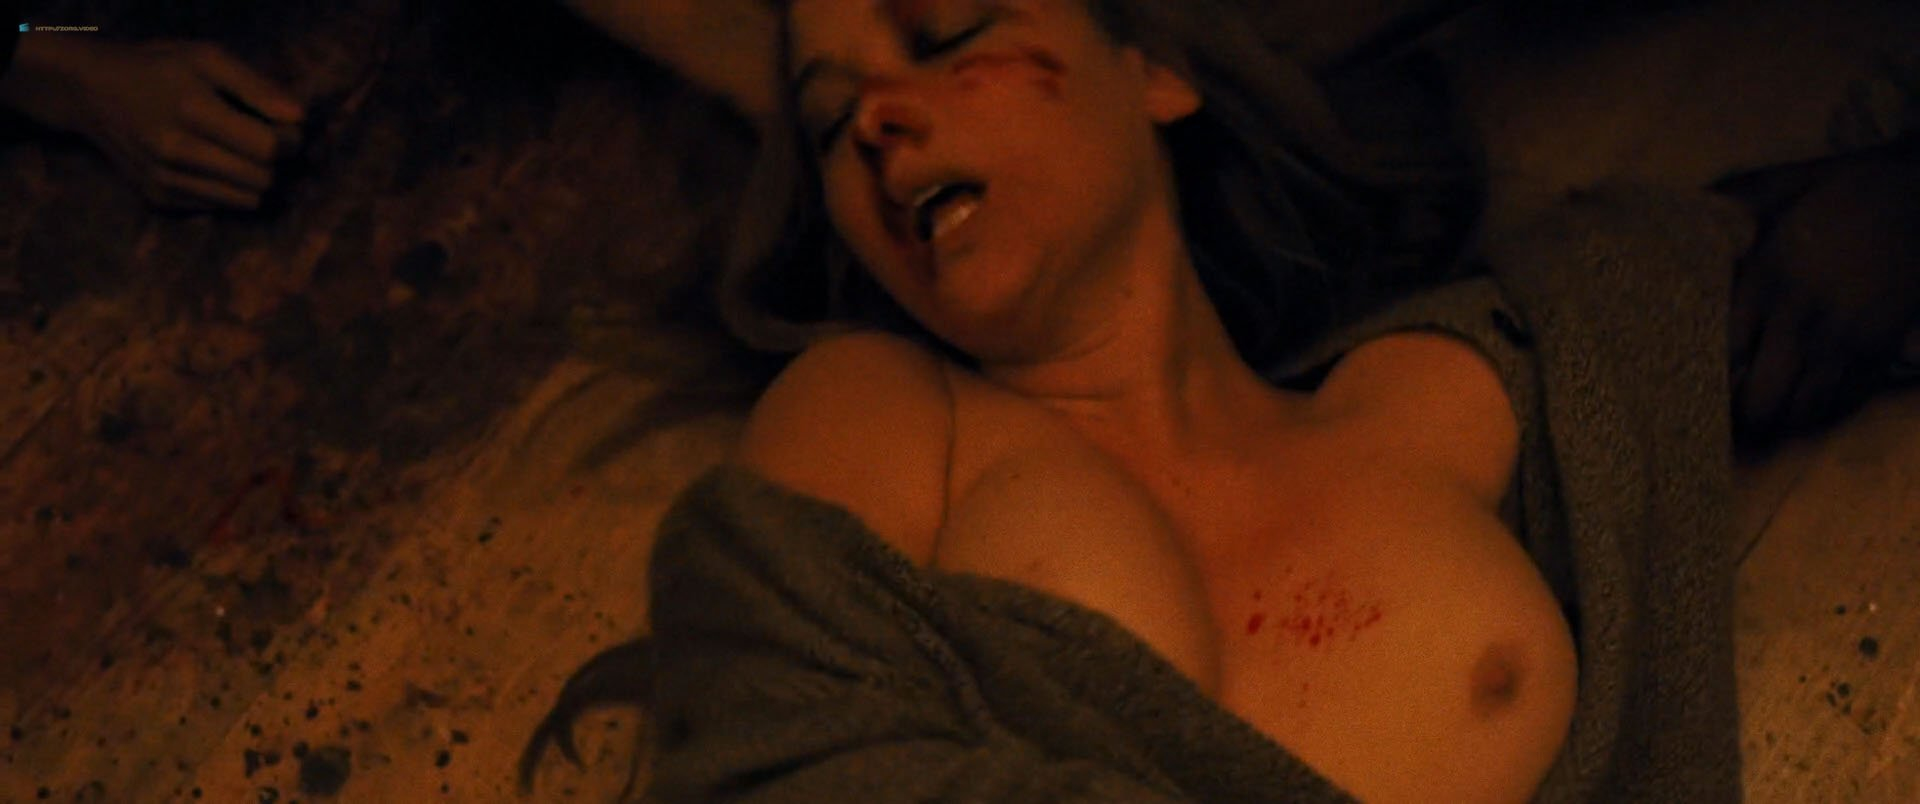 Jennifer lawrence movies nude